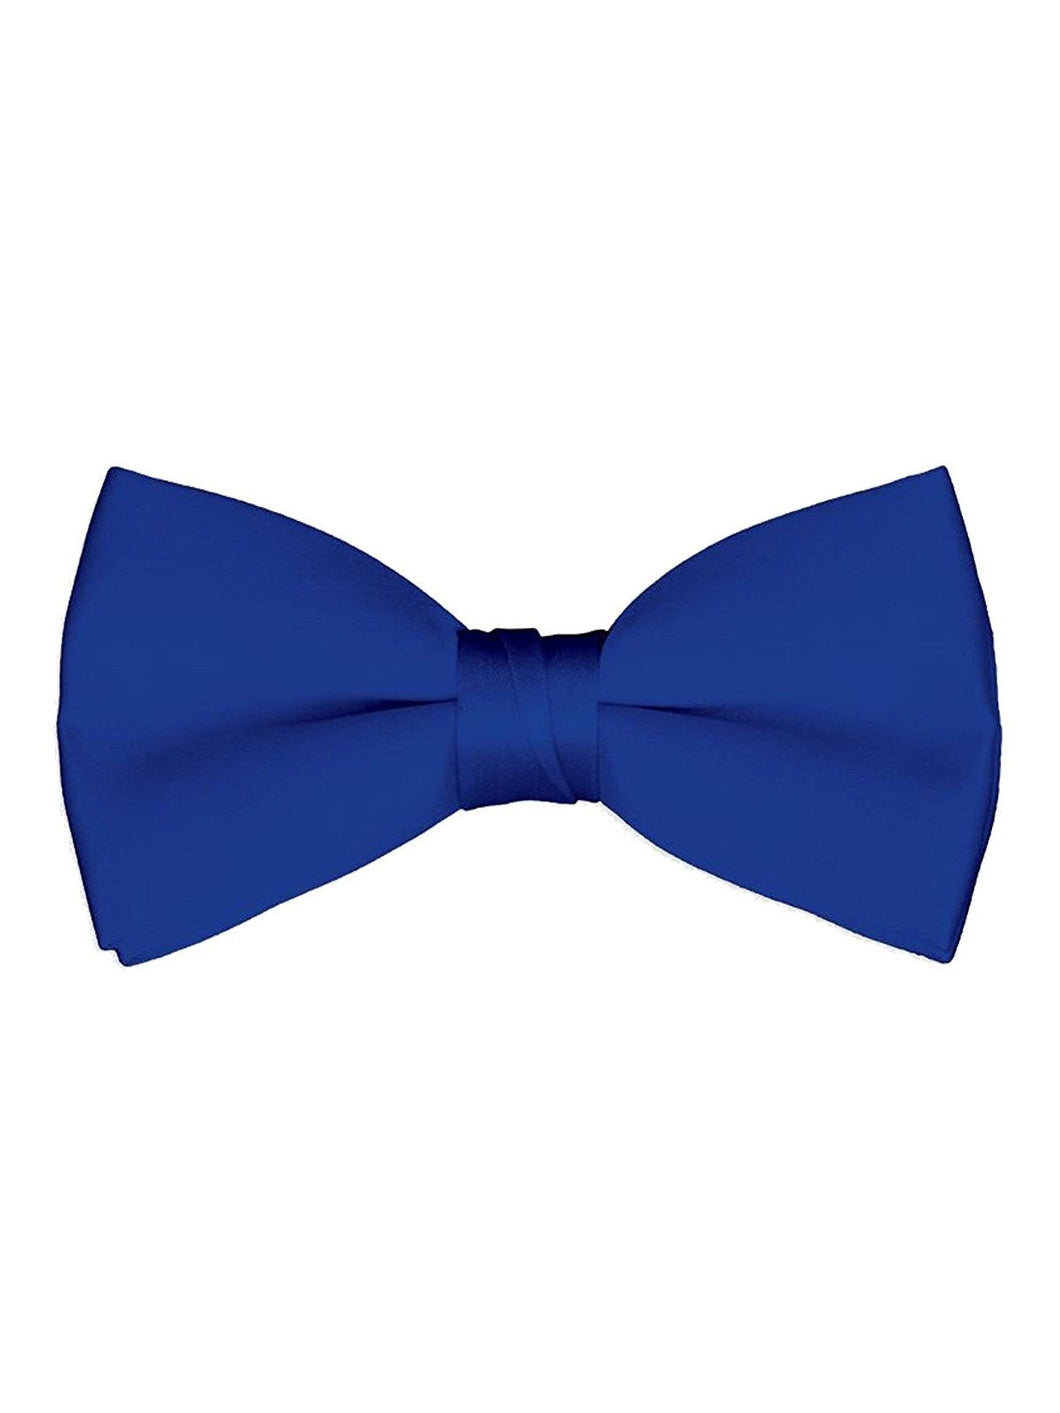 Men's Classic Pre-Tied Formal Tuxedo Bow Tie - Royal Blue